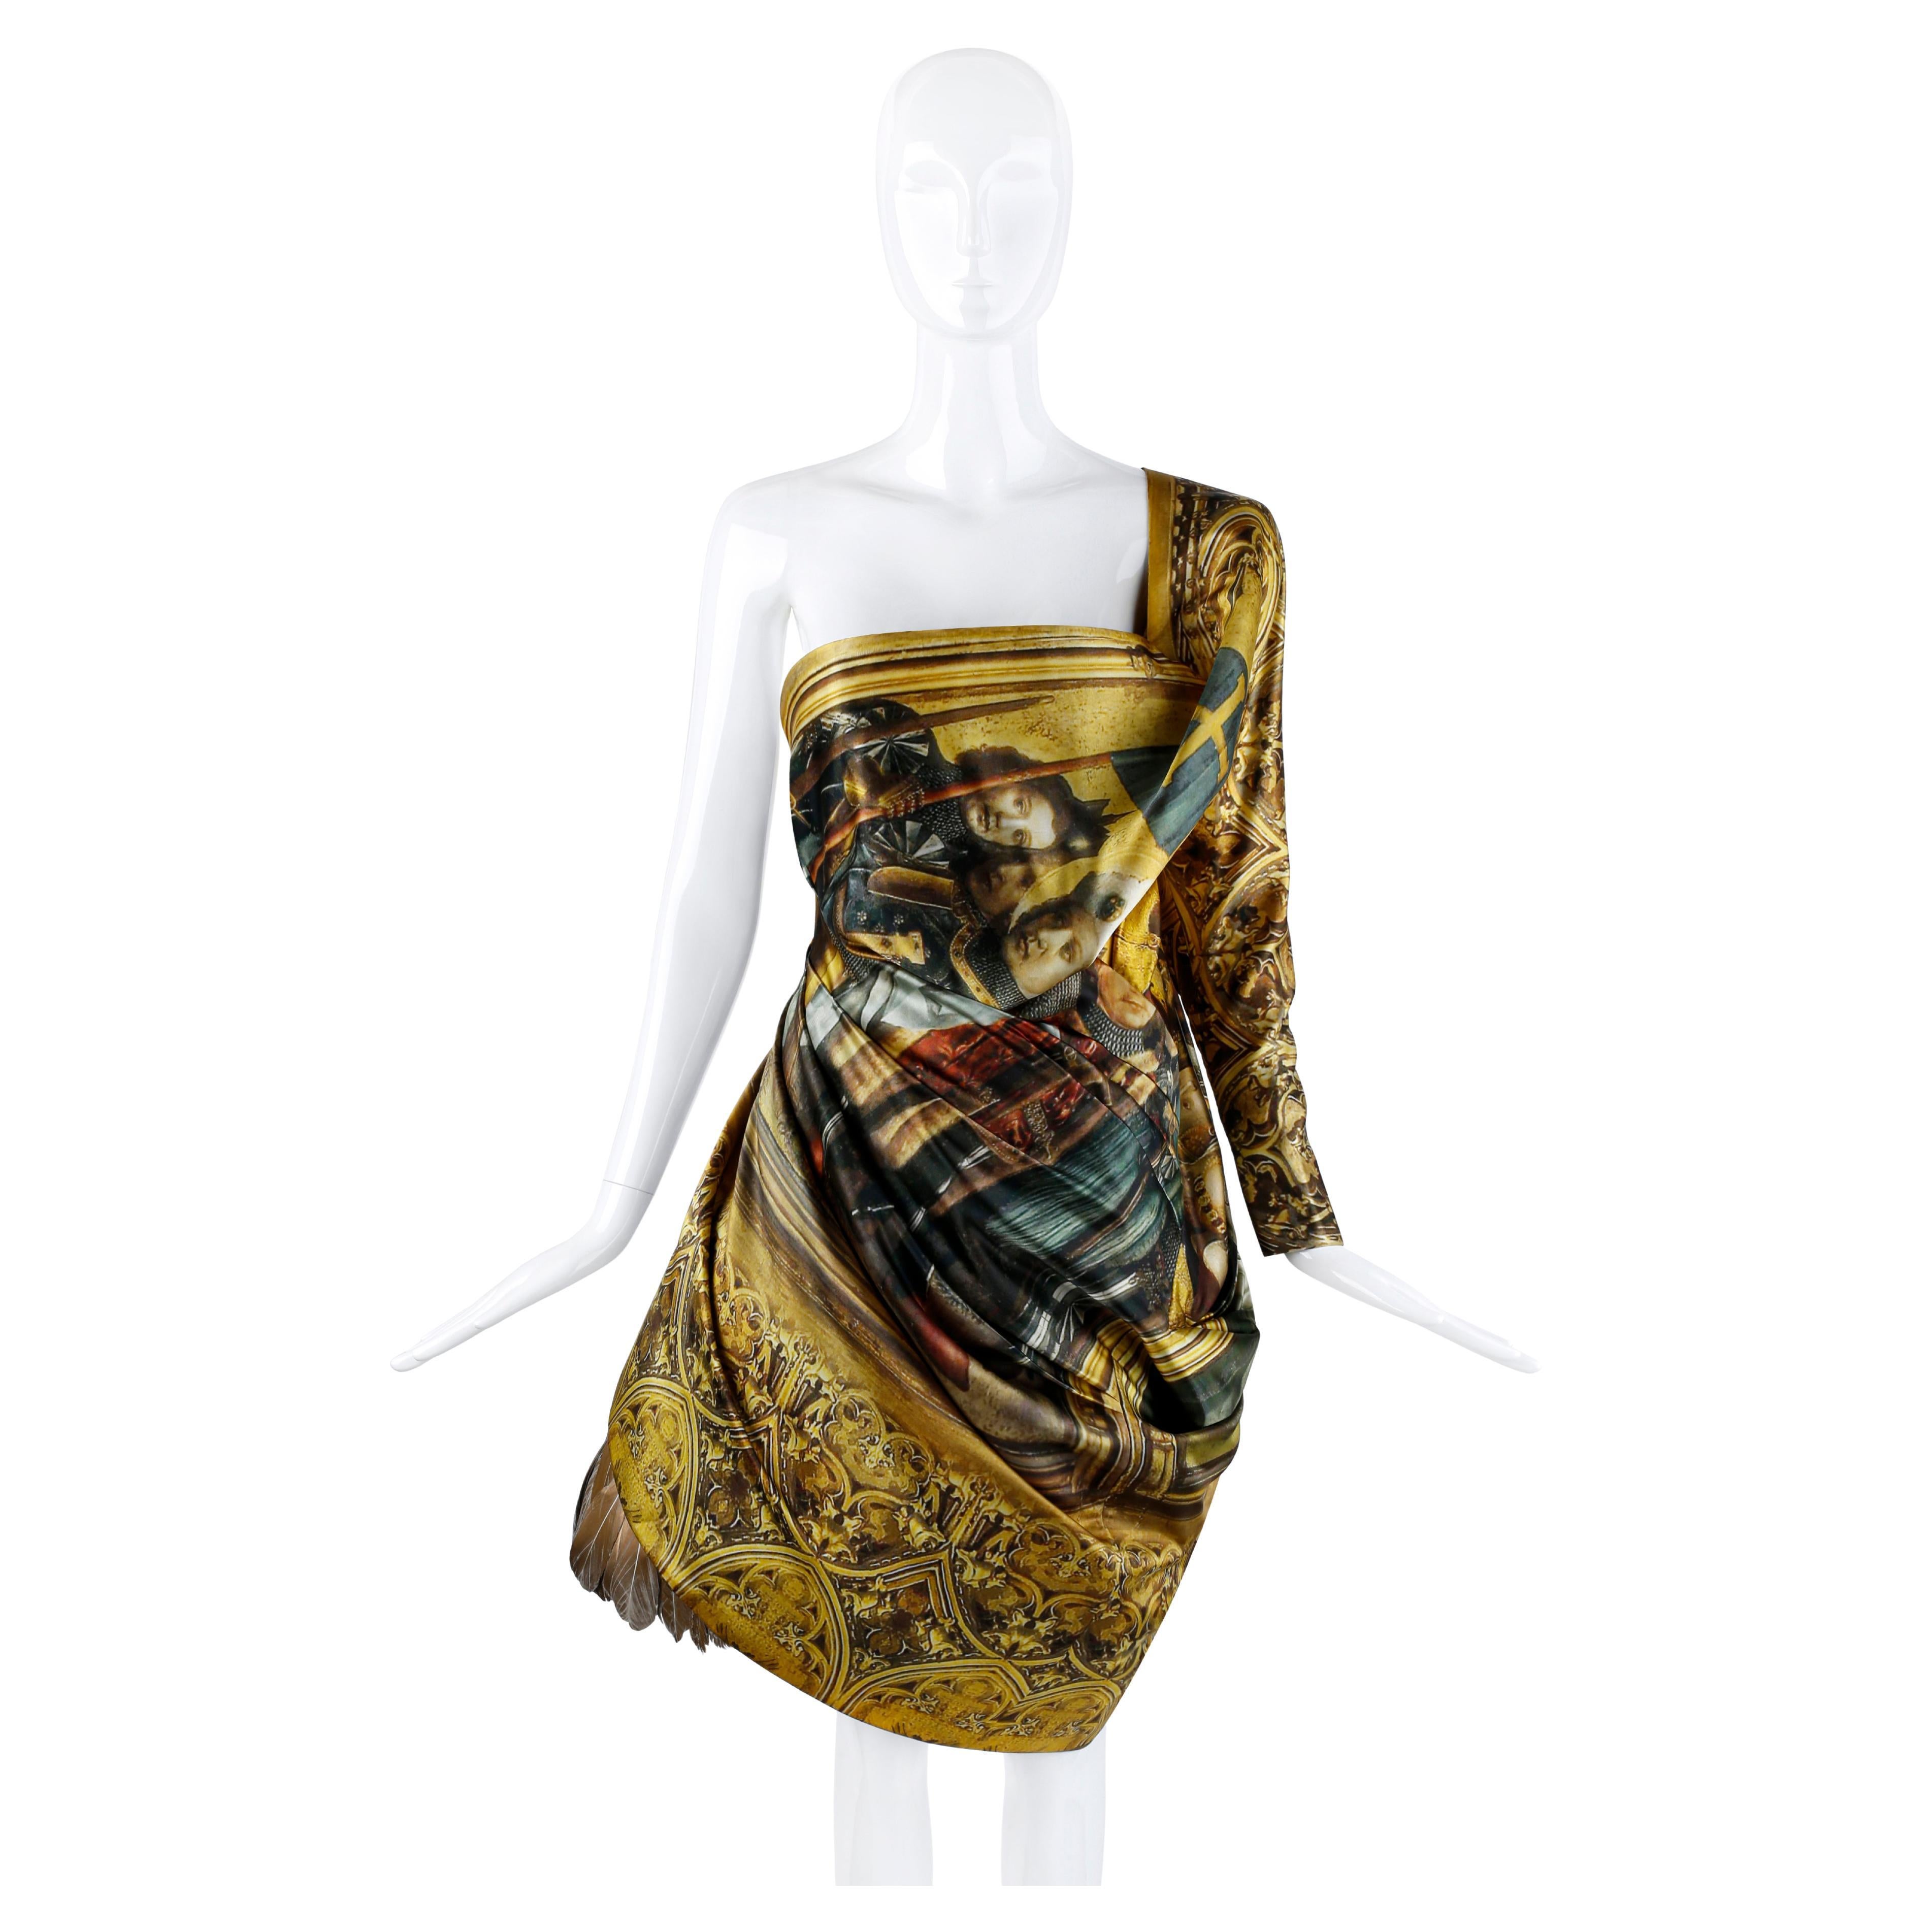 Alexander McQueen F/W 2010 “Angels & Demons” Medieval Art Royalty Gown Dress